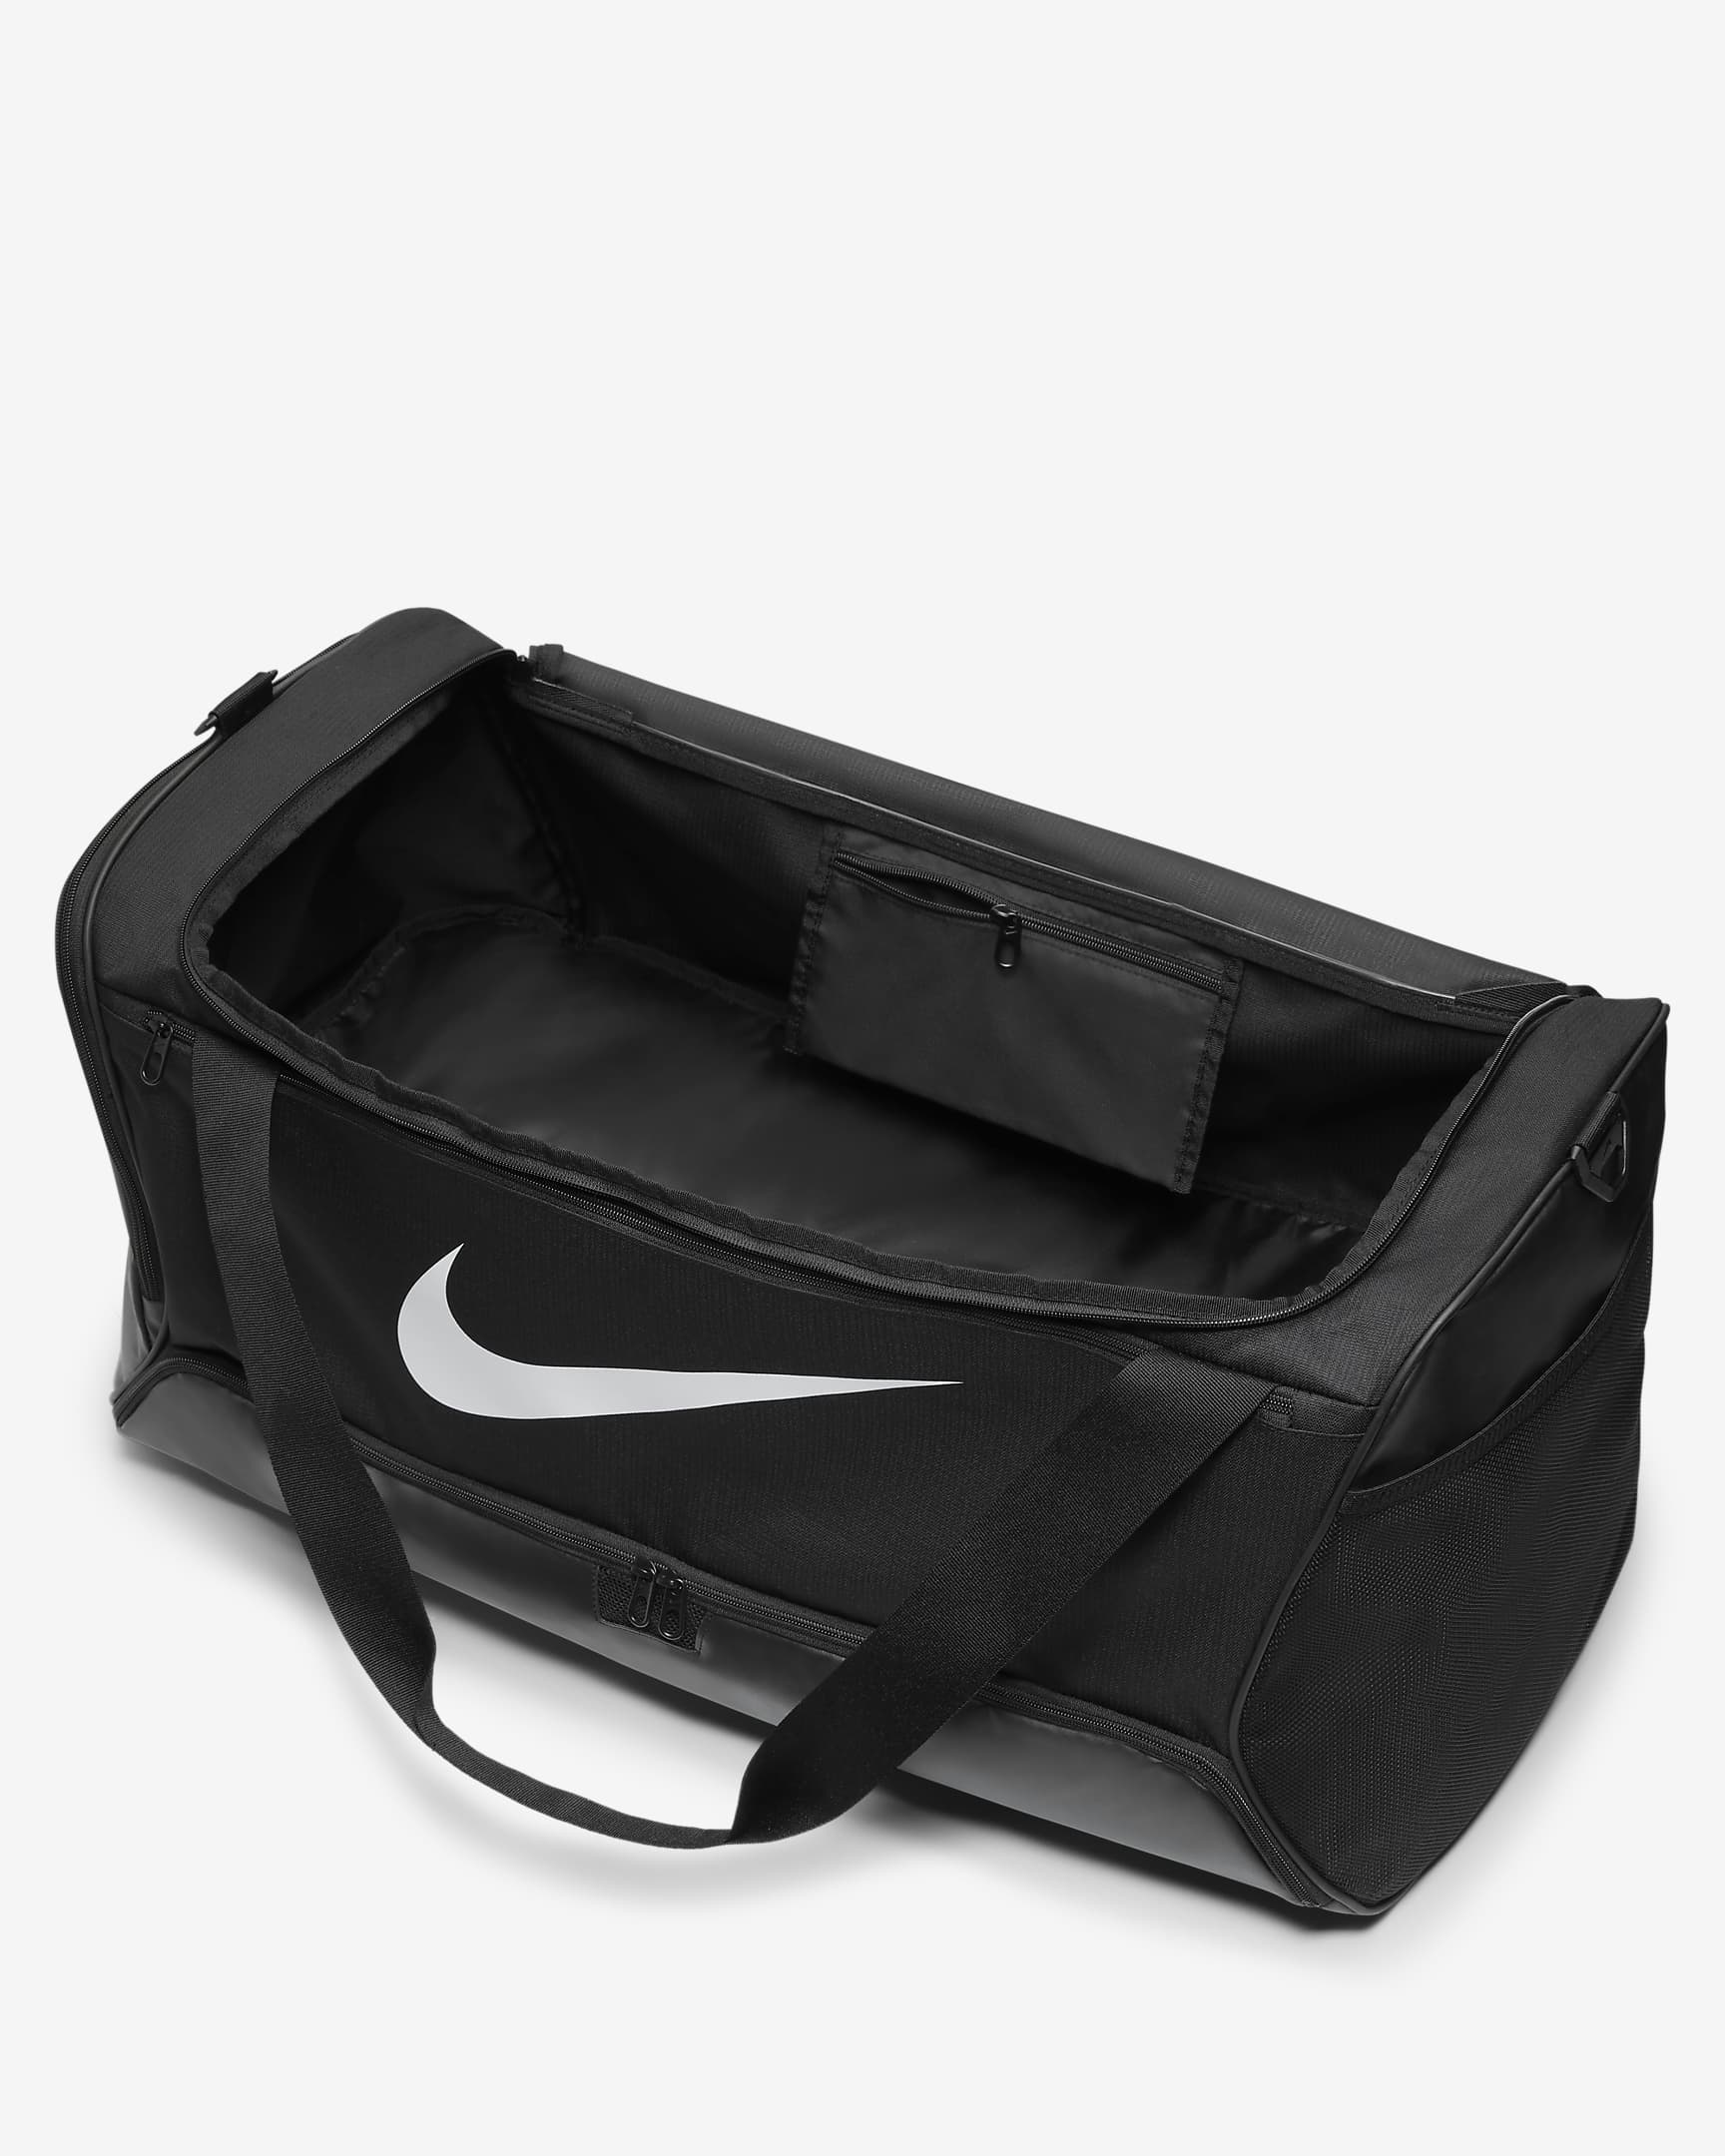 Nike Brasilia 9.5 Training Duffel Bag (Large, 95L). Nike AU